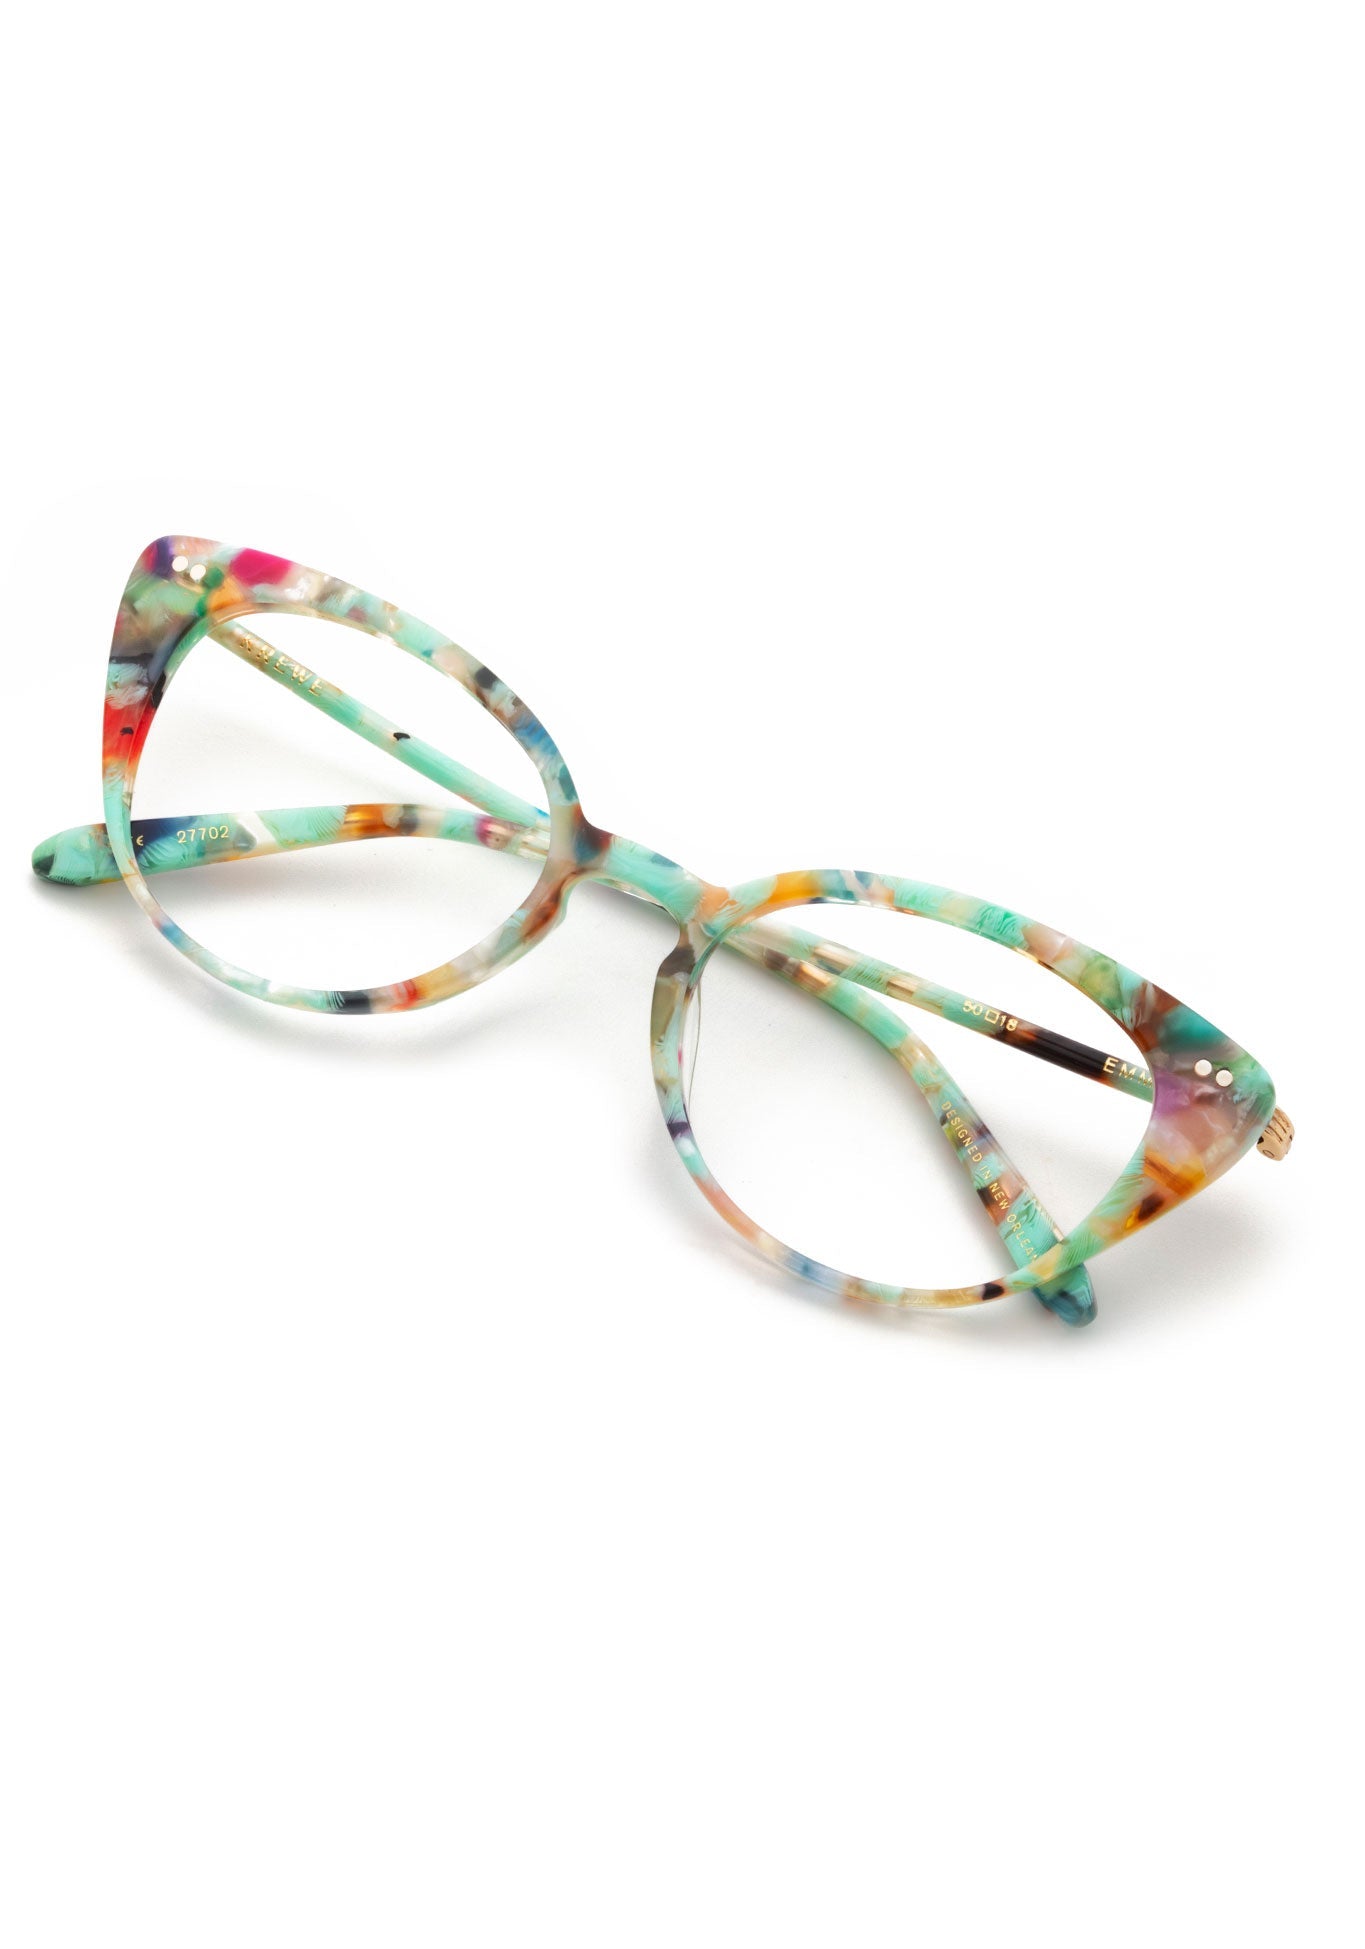 KREWE - Designer Cat Eye Eyeglasses - EMMA | Macaron Handcrafted, luxury colorful tortoise shell acetate eyeglasses. Similar to Oliver Peoples eyeglasses, moscot eyeglasses, warby parker eyeglasses